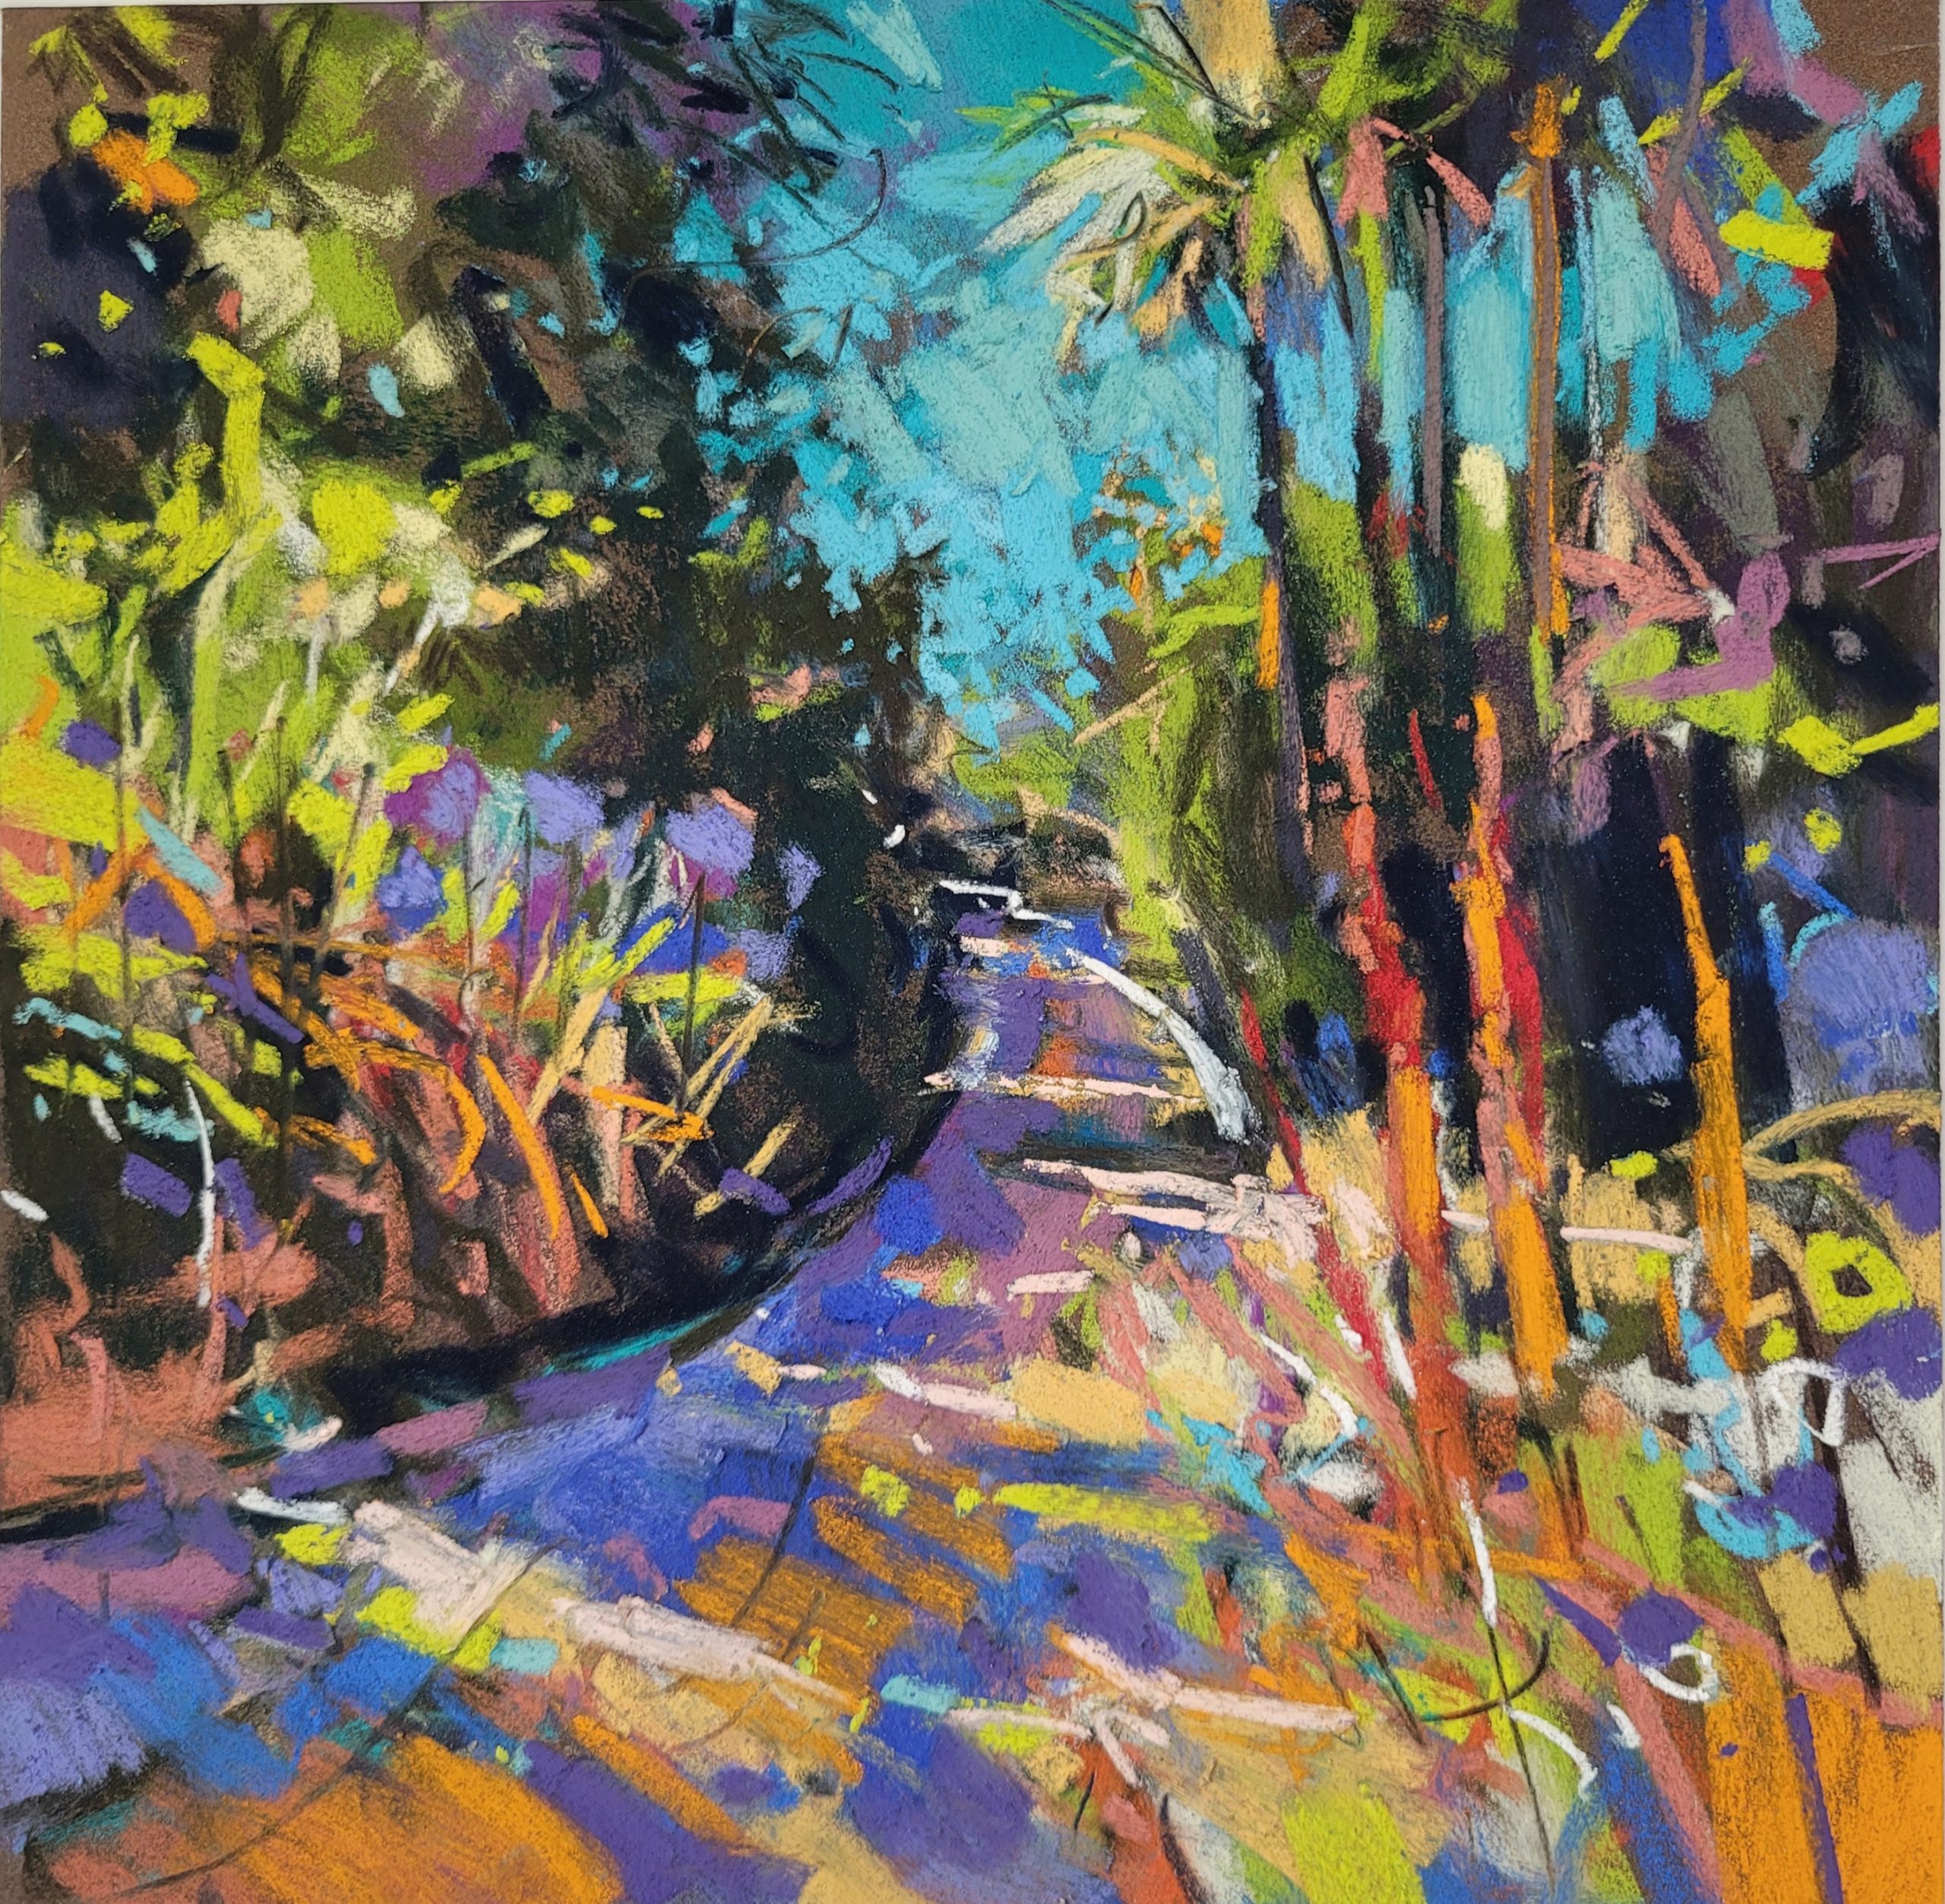 Influence of Pierre Bonnard: Richard Suckling, "Sunlight and Palms," 2022, pastels on Sennelier La Carte Pastel Card, 29 x 29 cm